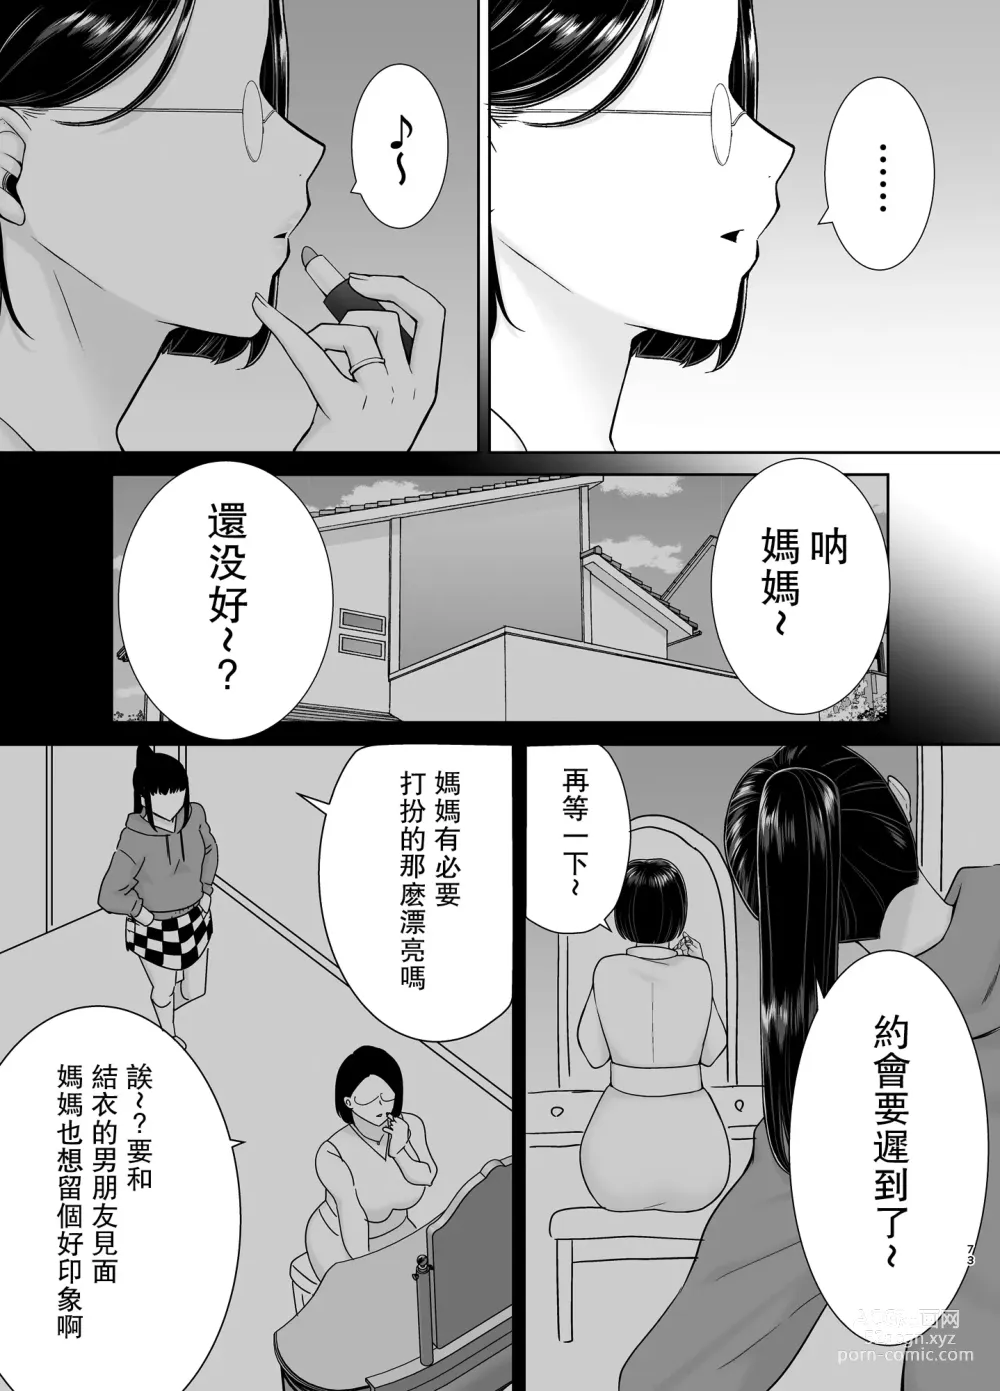 Page 701 of doujinshi mom